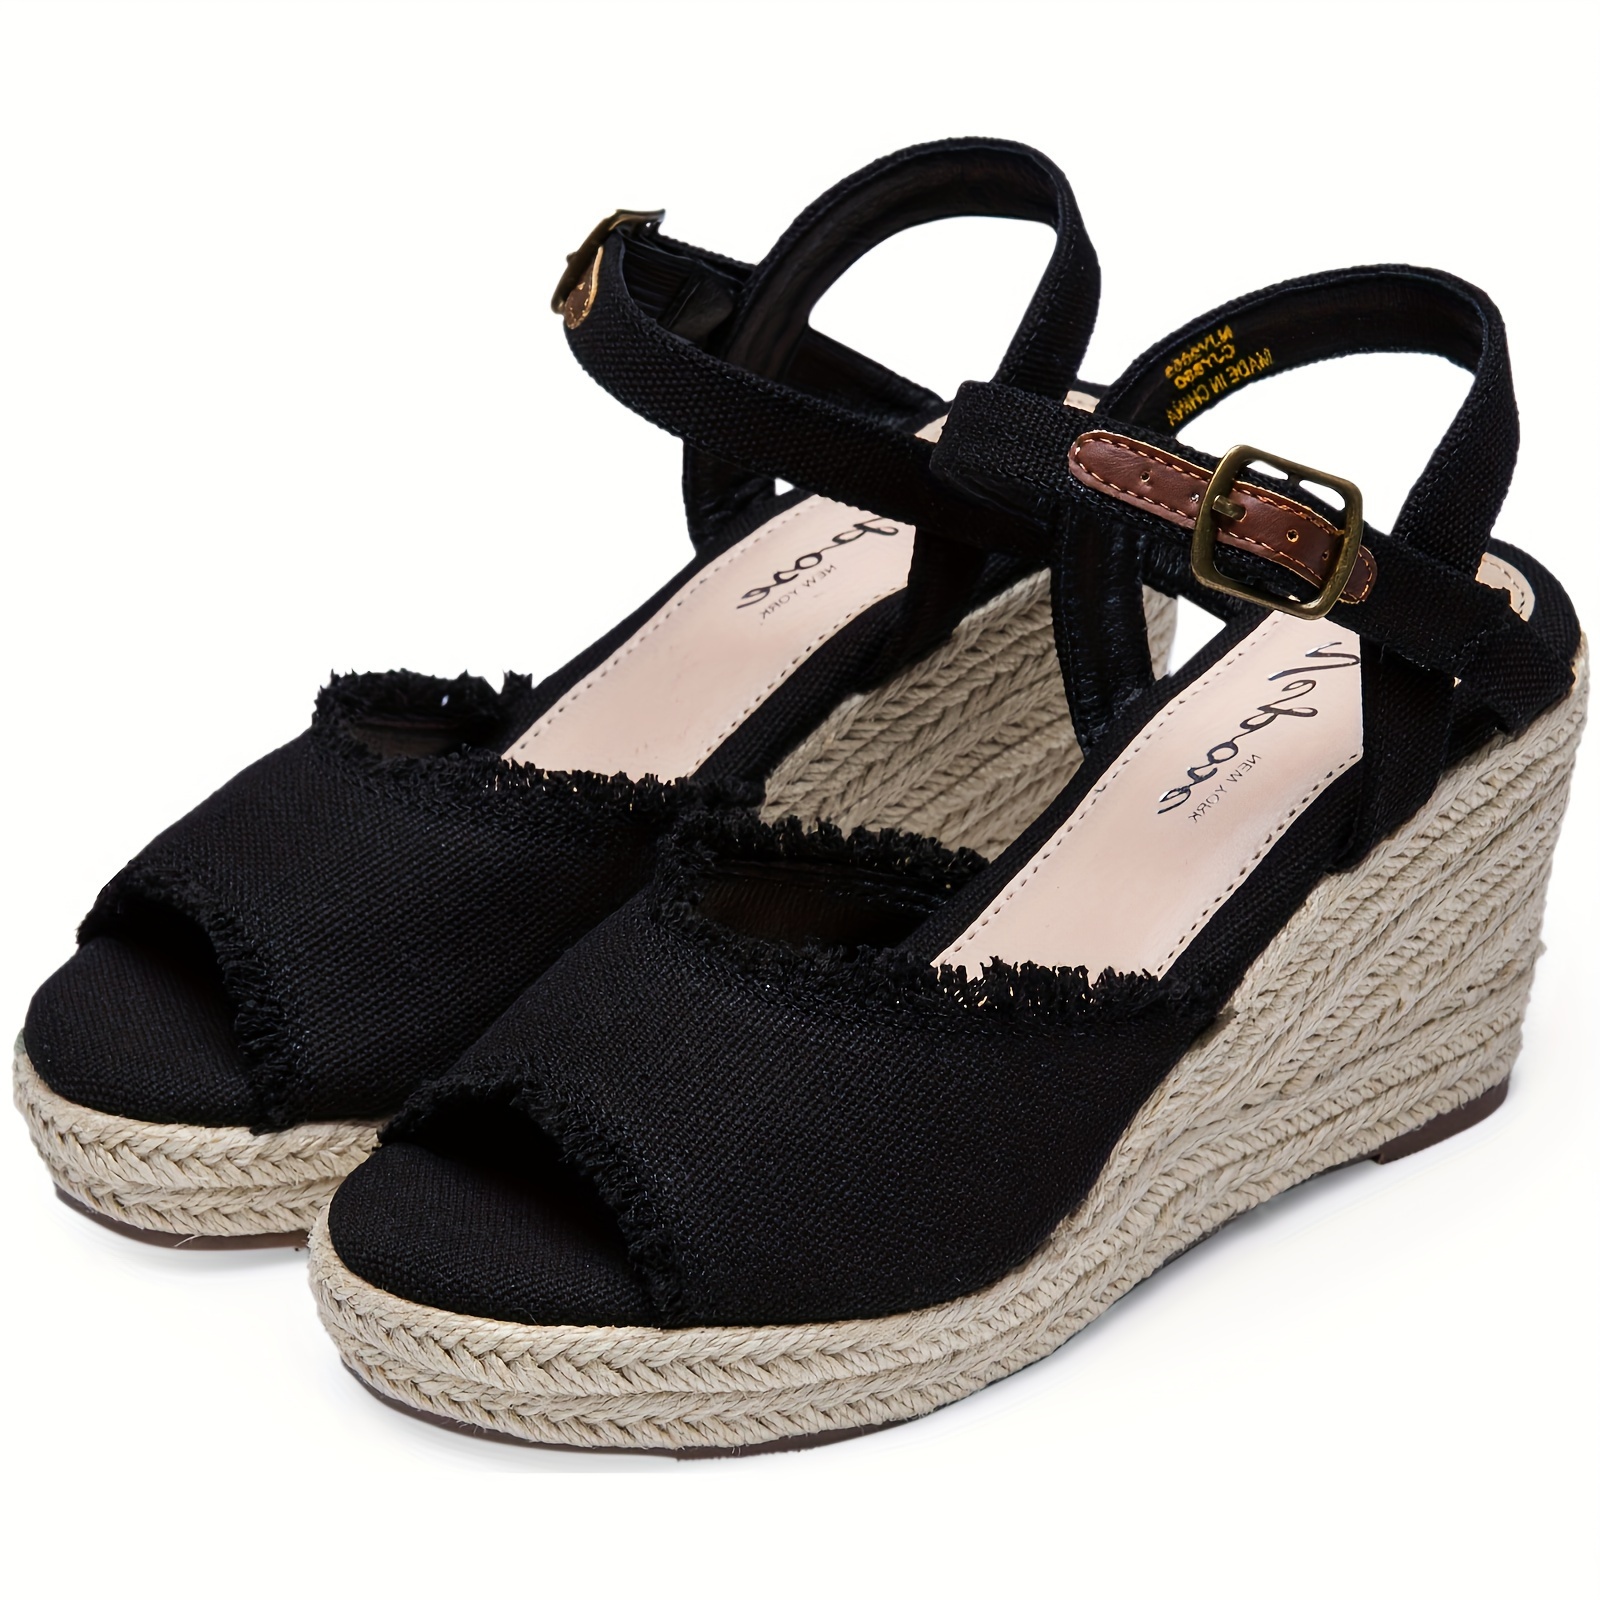 

Women's Espadrilles Wedge Sandals, Casual Peep Toe Summer Shoes, Comfortable Buckle Strap Sandals